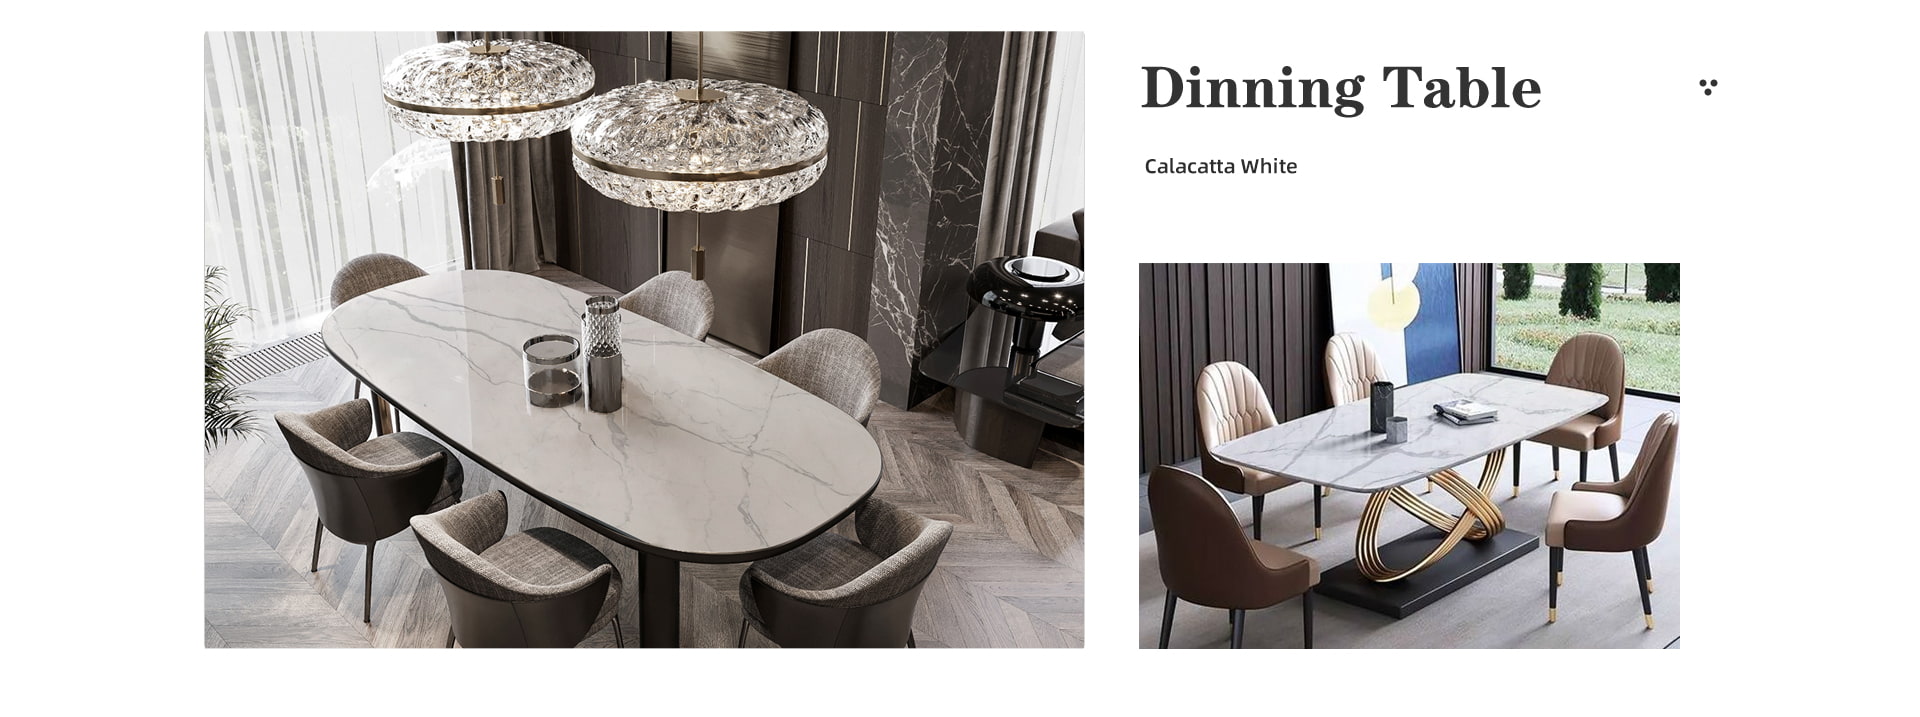 calacatta white dinning table